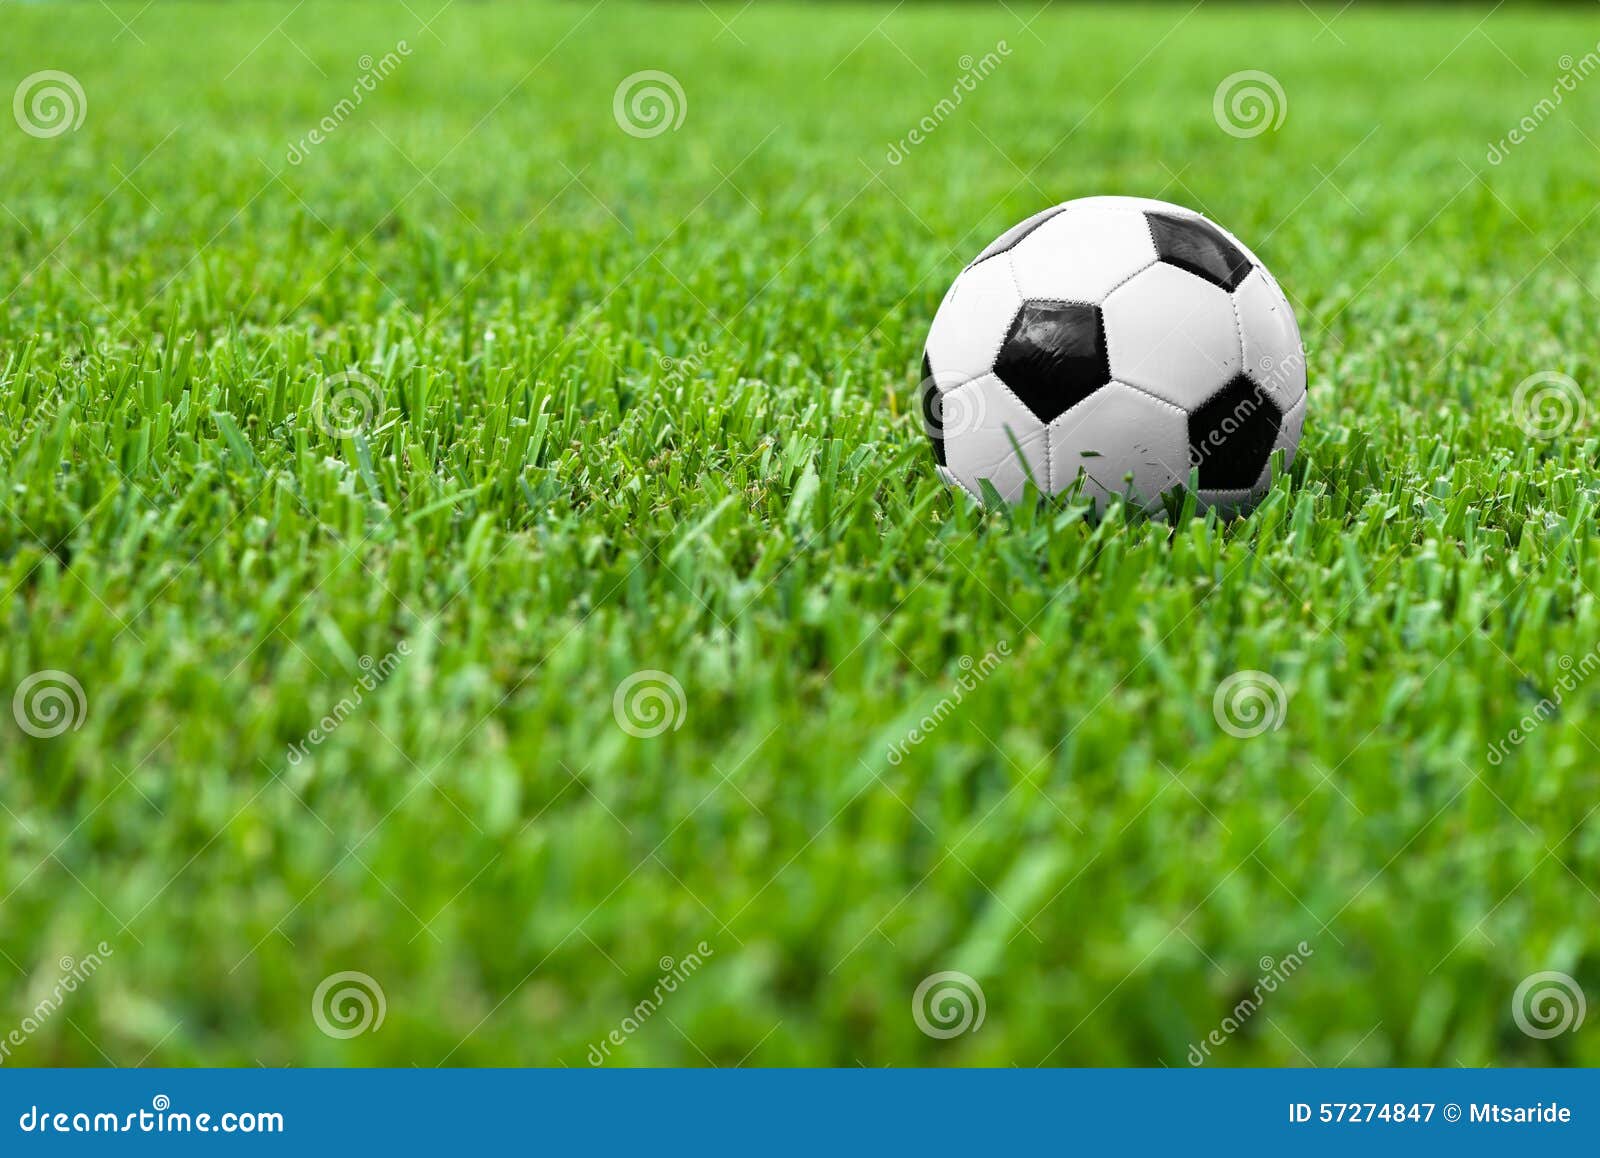 soccer ball futbol on grass